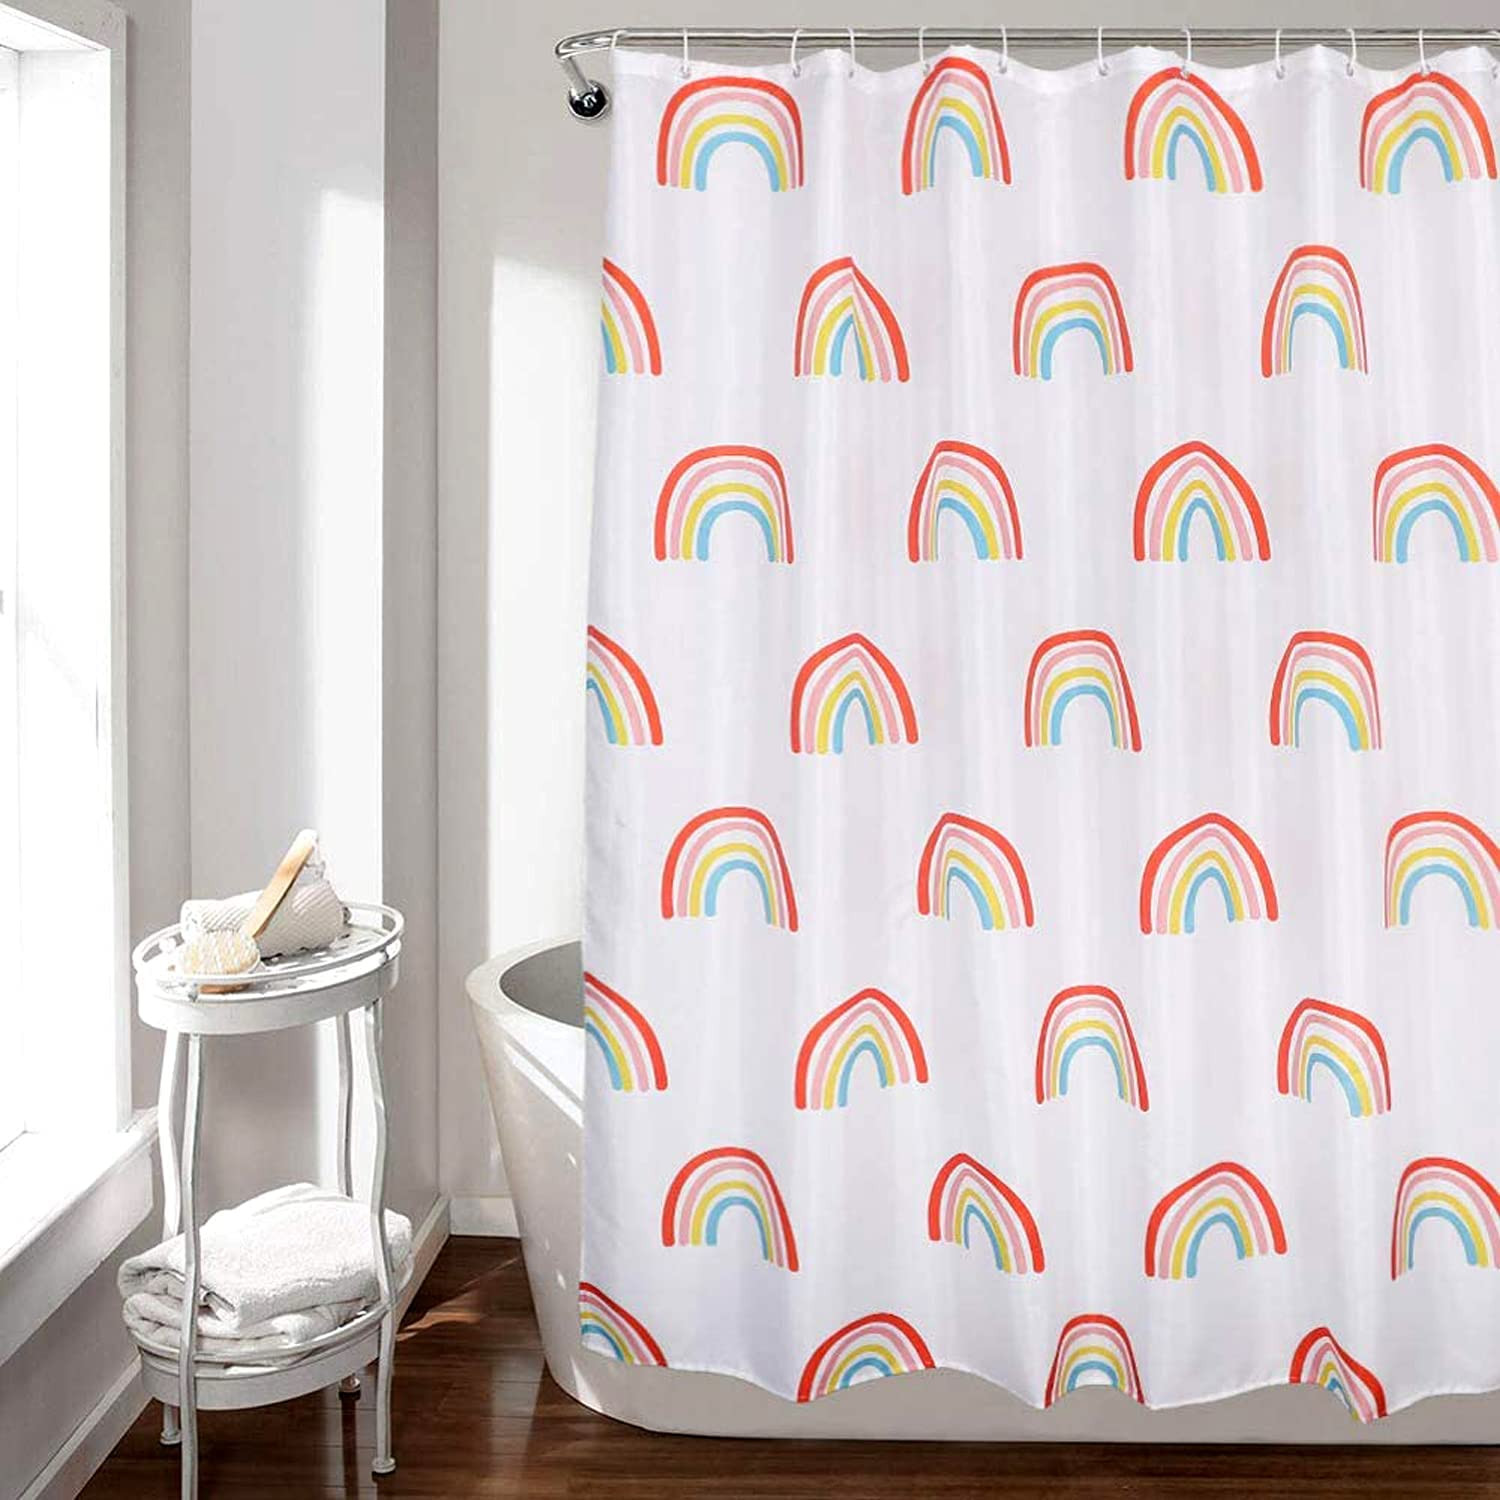 Kuber Industries 7 Feet PVC Rainbow Print Shower Curtain/AC Curtain For Bathroom, Living Room With 8 Hooks (White)